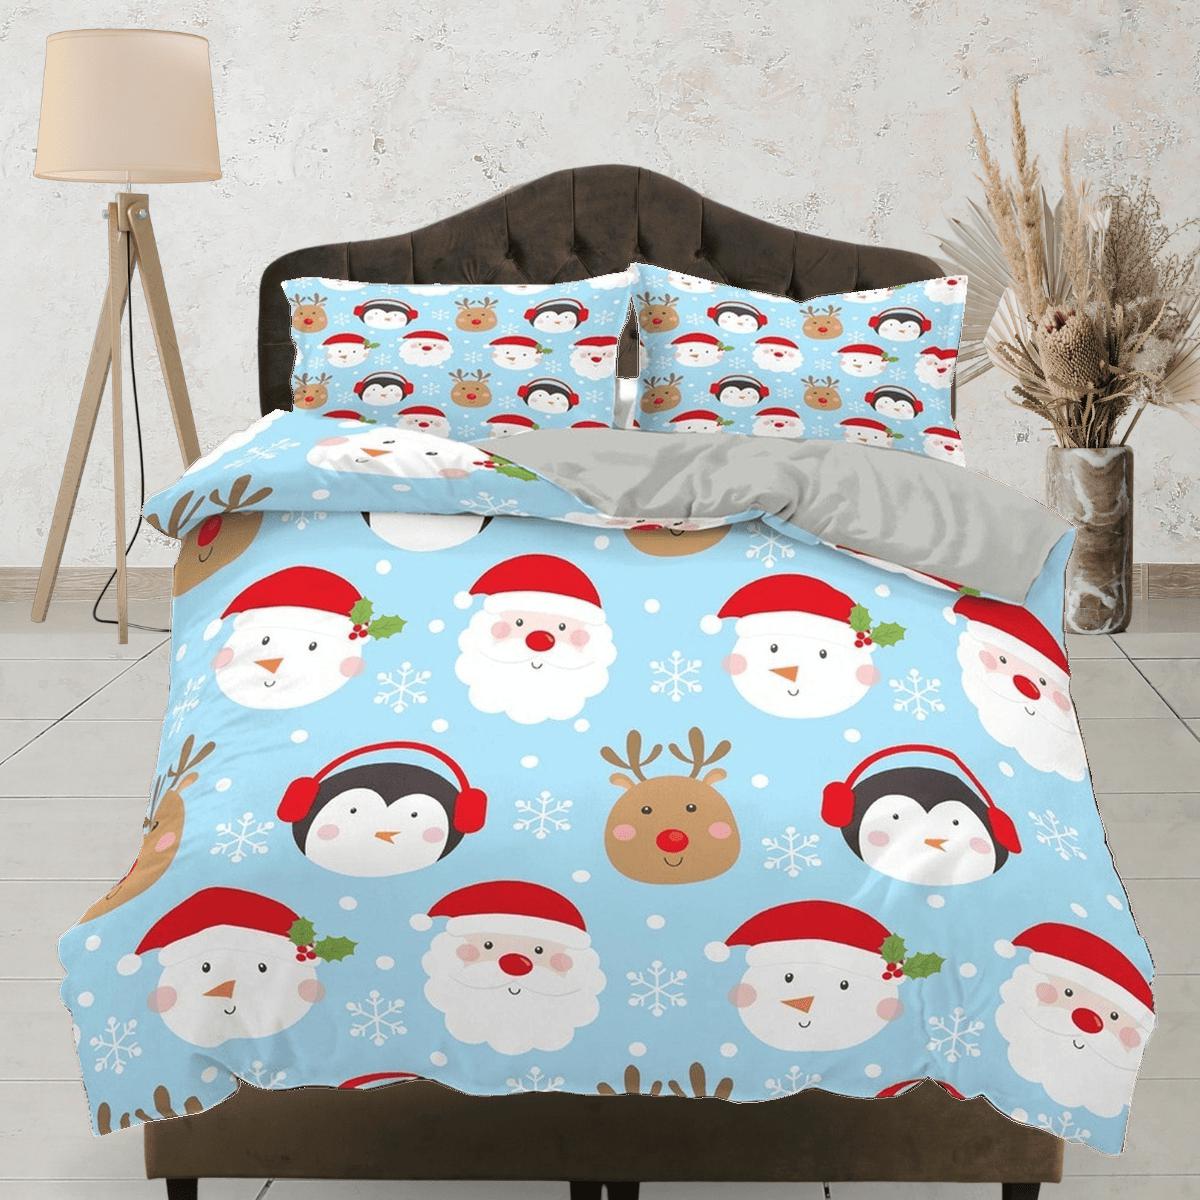 daintyduvet Penguin reindeer Santa Claus Christmas bedding, pillowcase holiday gift duvet cover king queen twin toddler bedding baby Christmas farmhouse